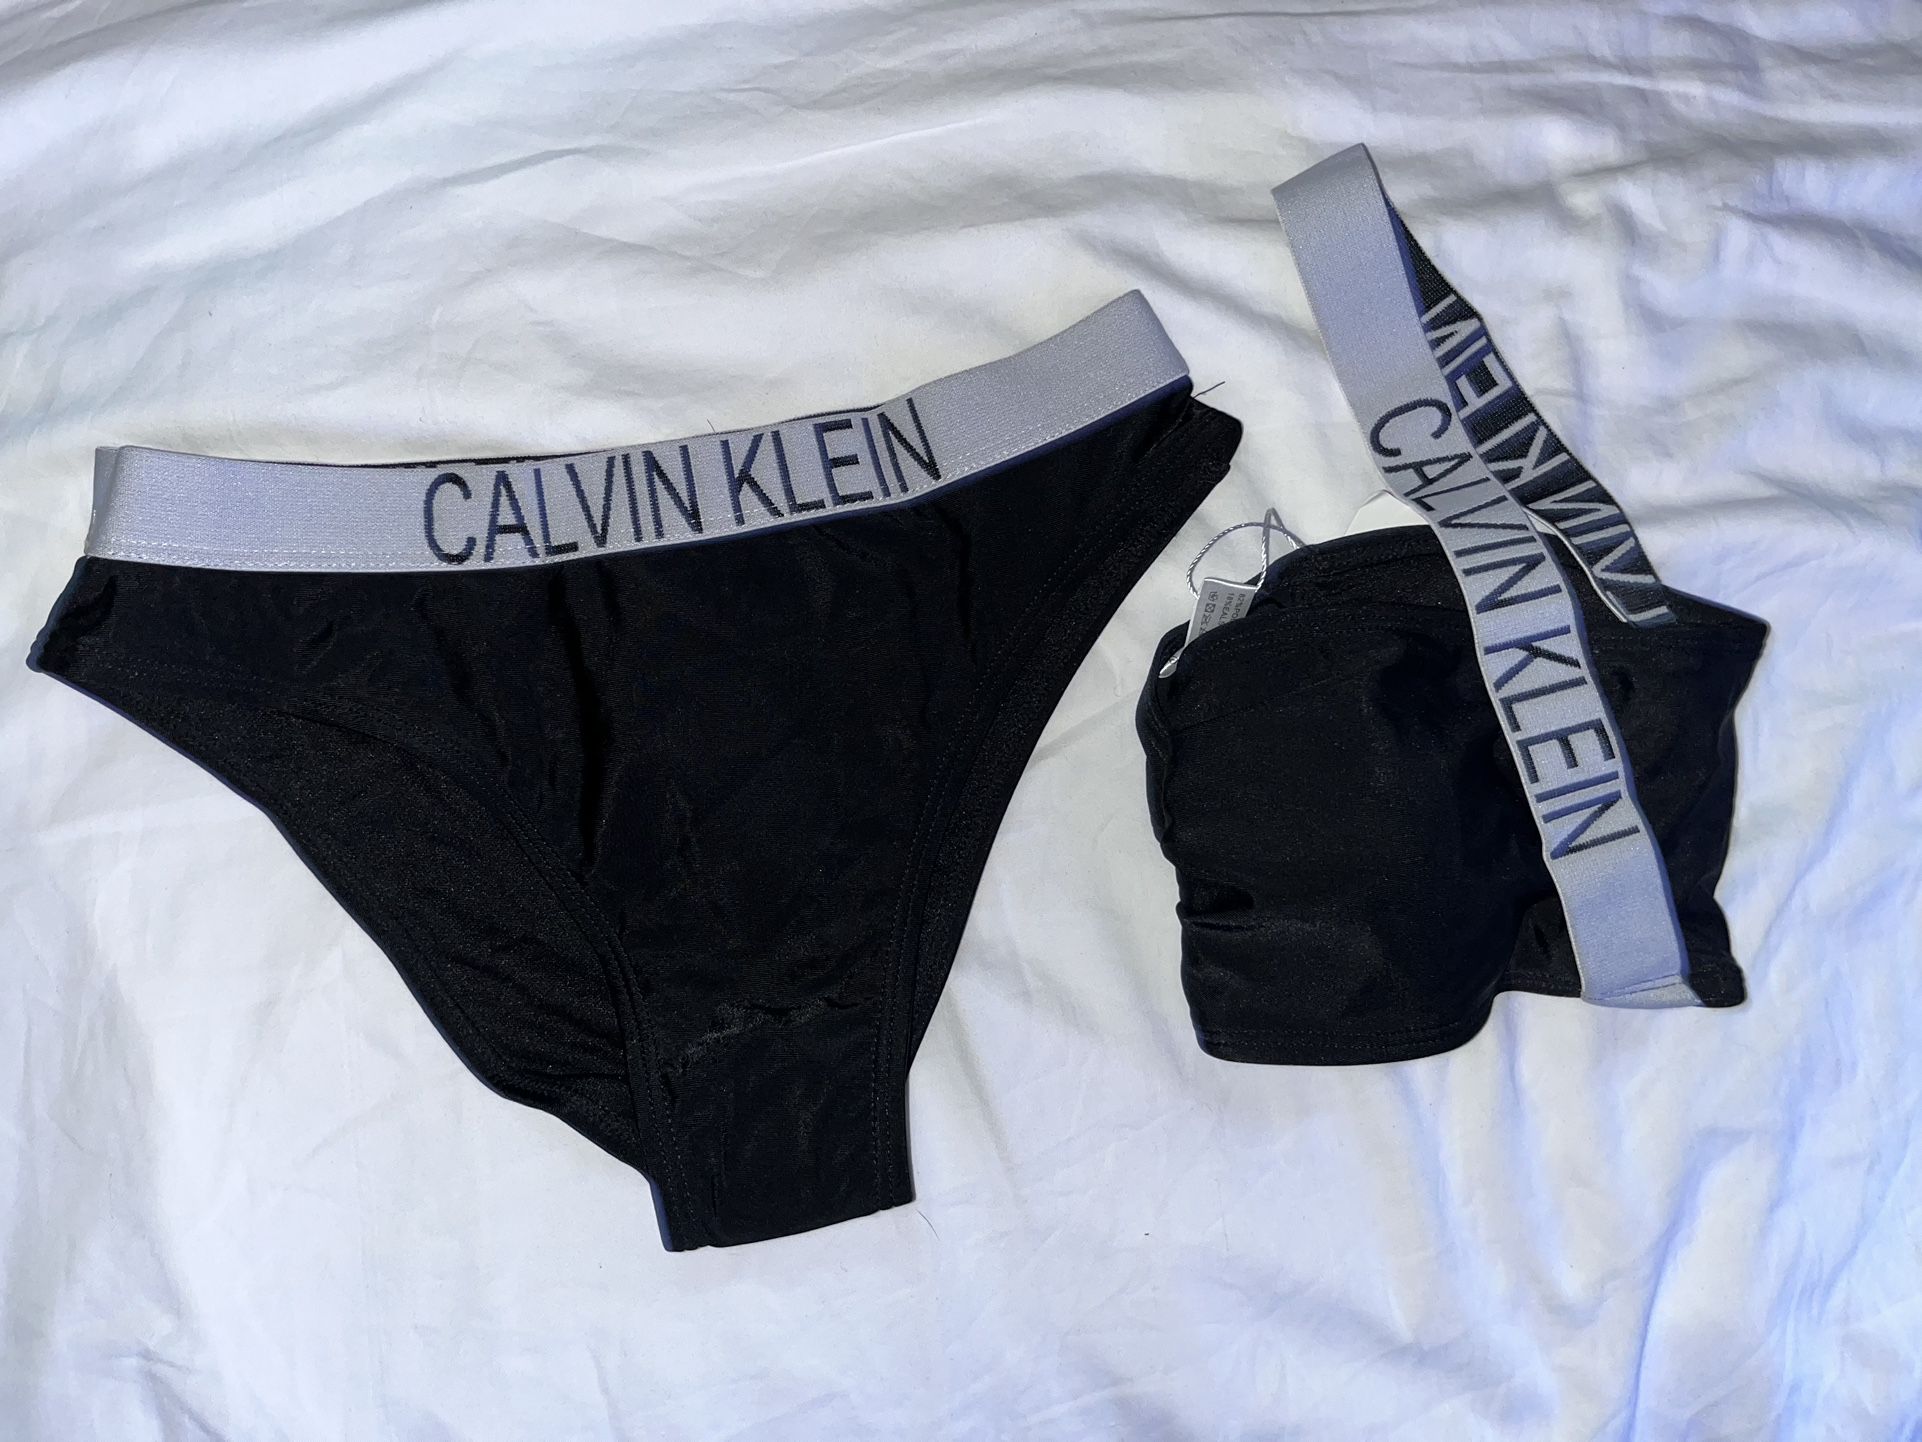 Calvin Klein swimsuits